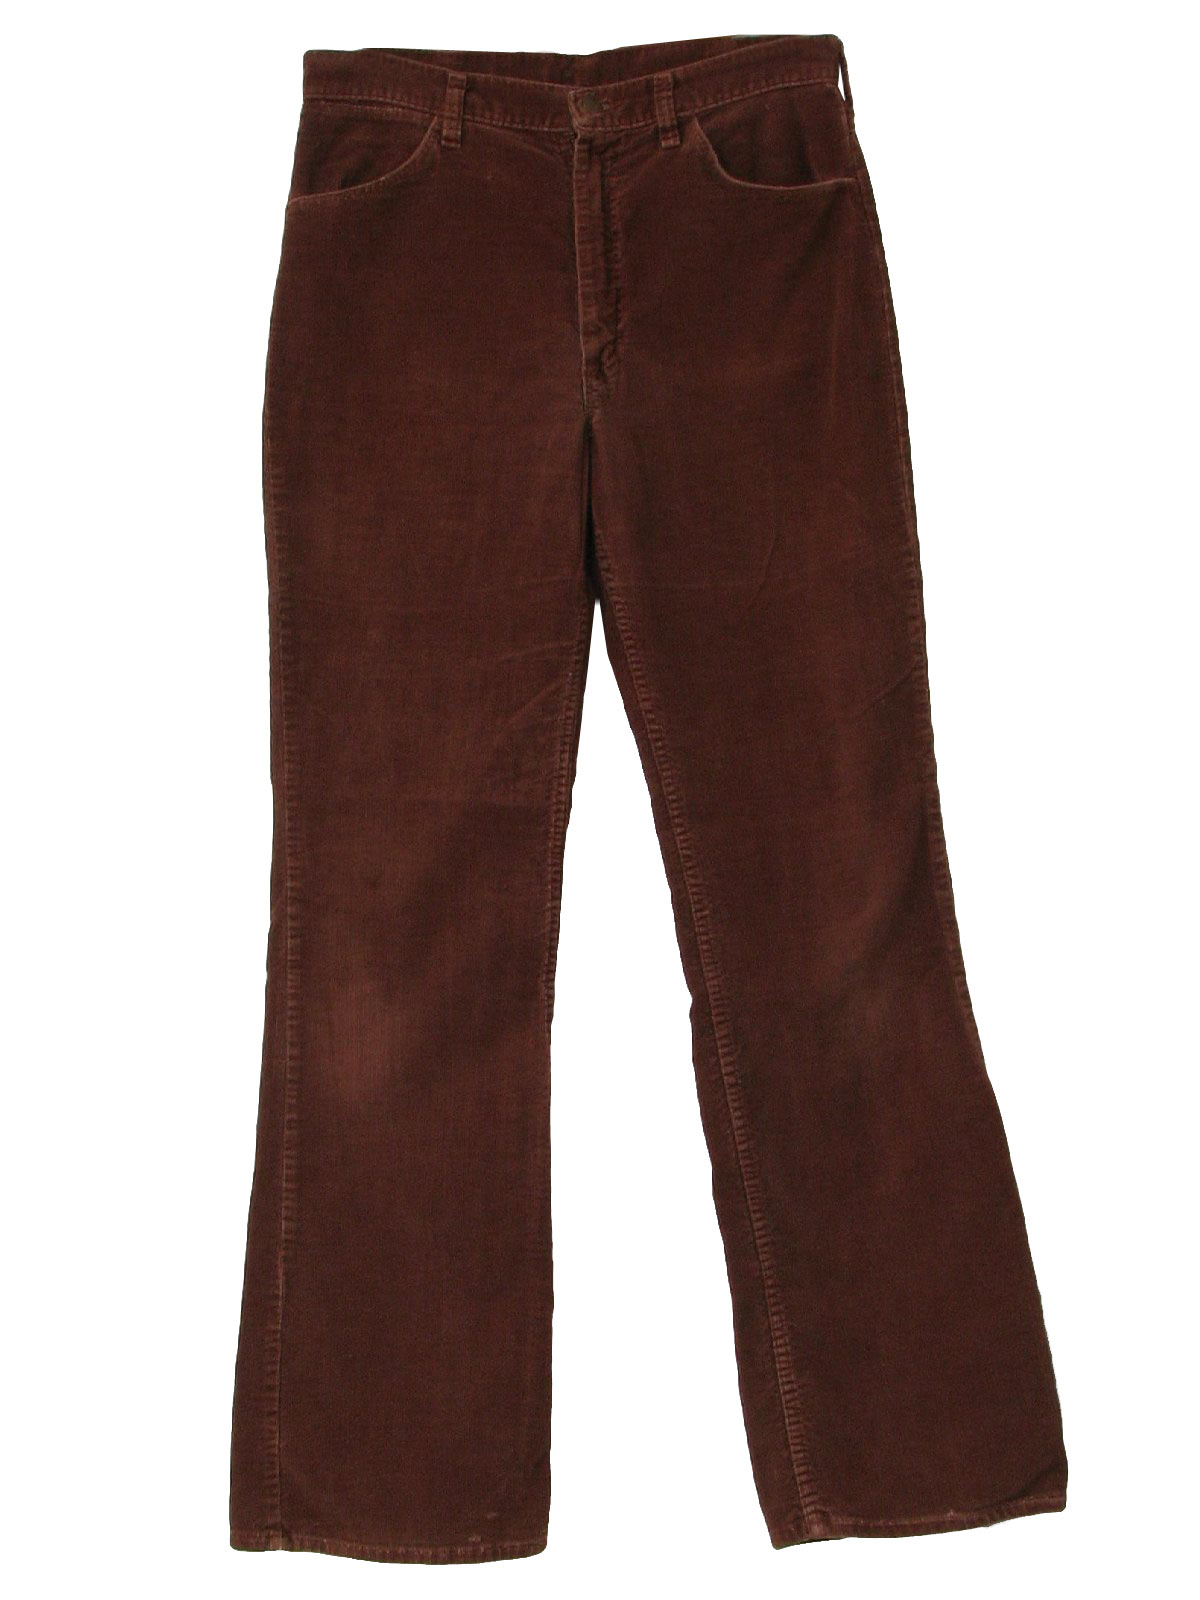 Retro 90's Pants: 90s -Wrangler- Mens light maroon cotton corduroy ...